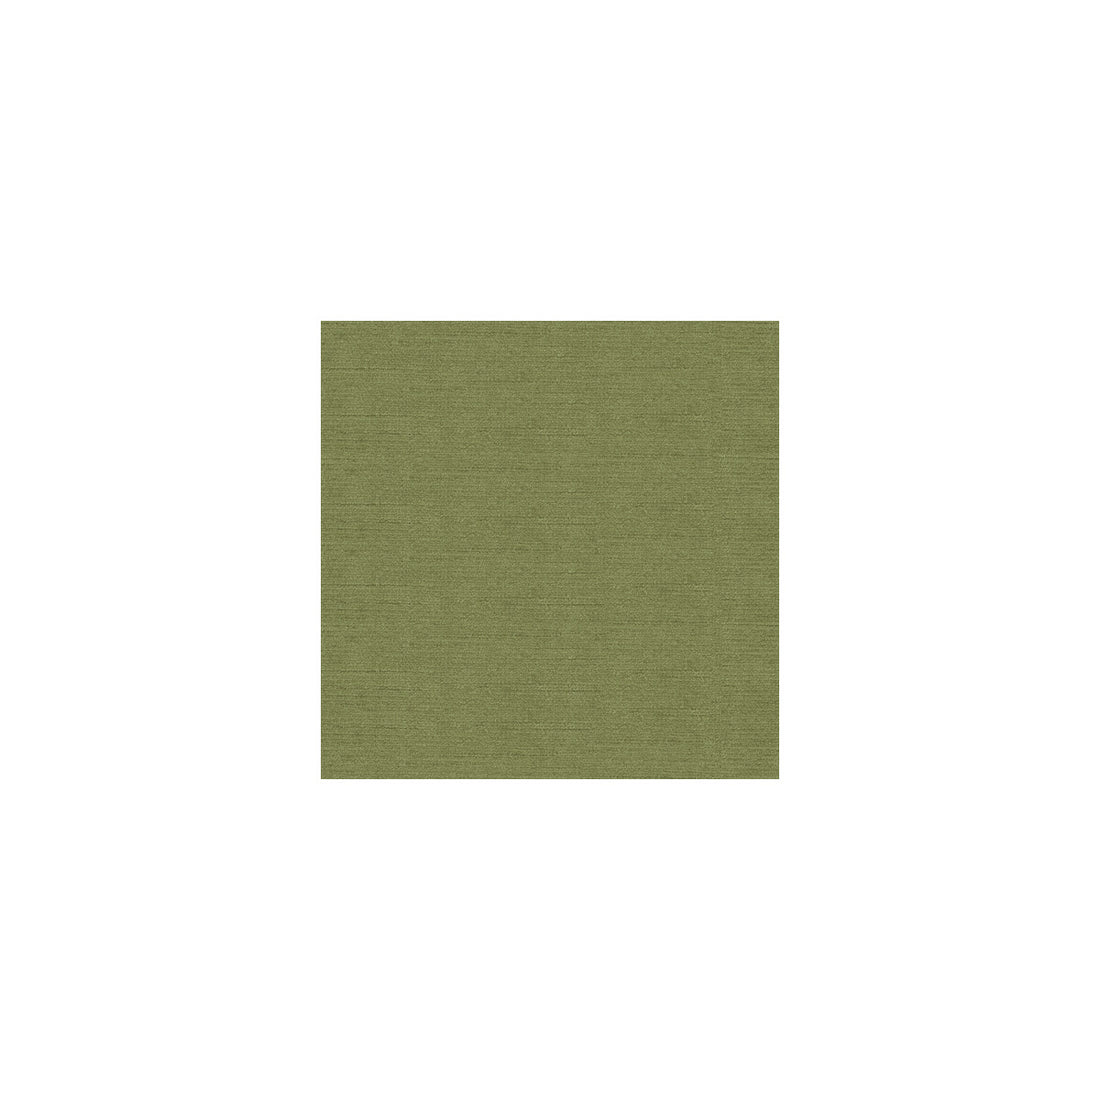 Venetian fabric in leaf color - pattern 31326.3333.0 - by Kravet Design